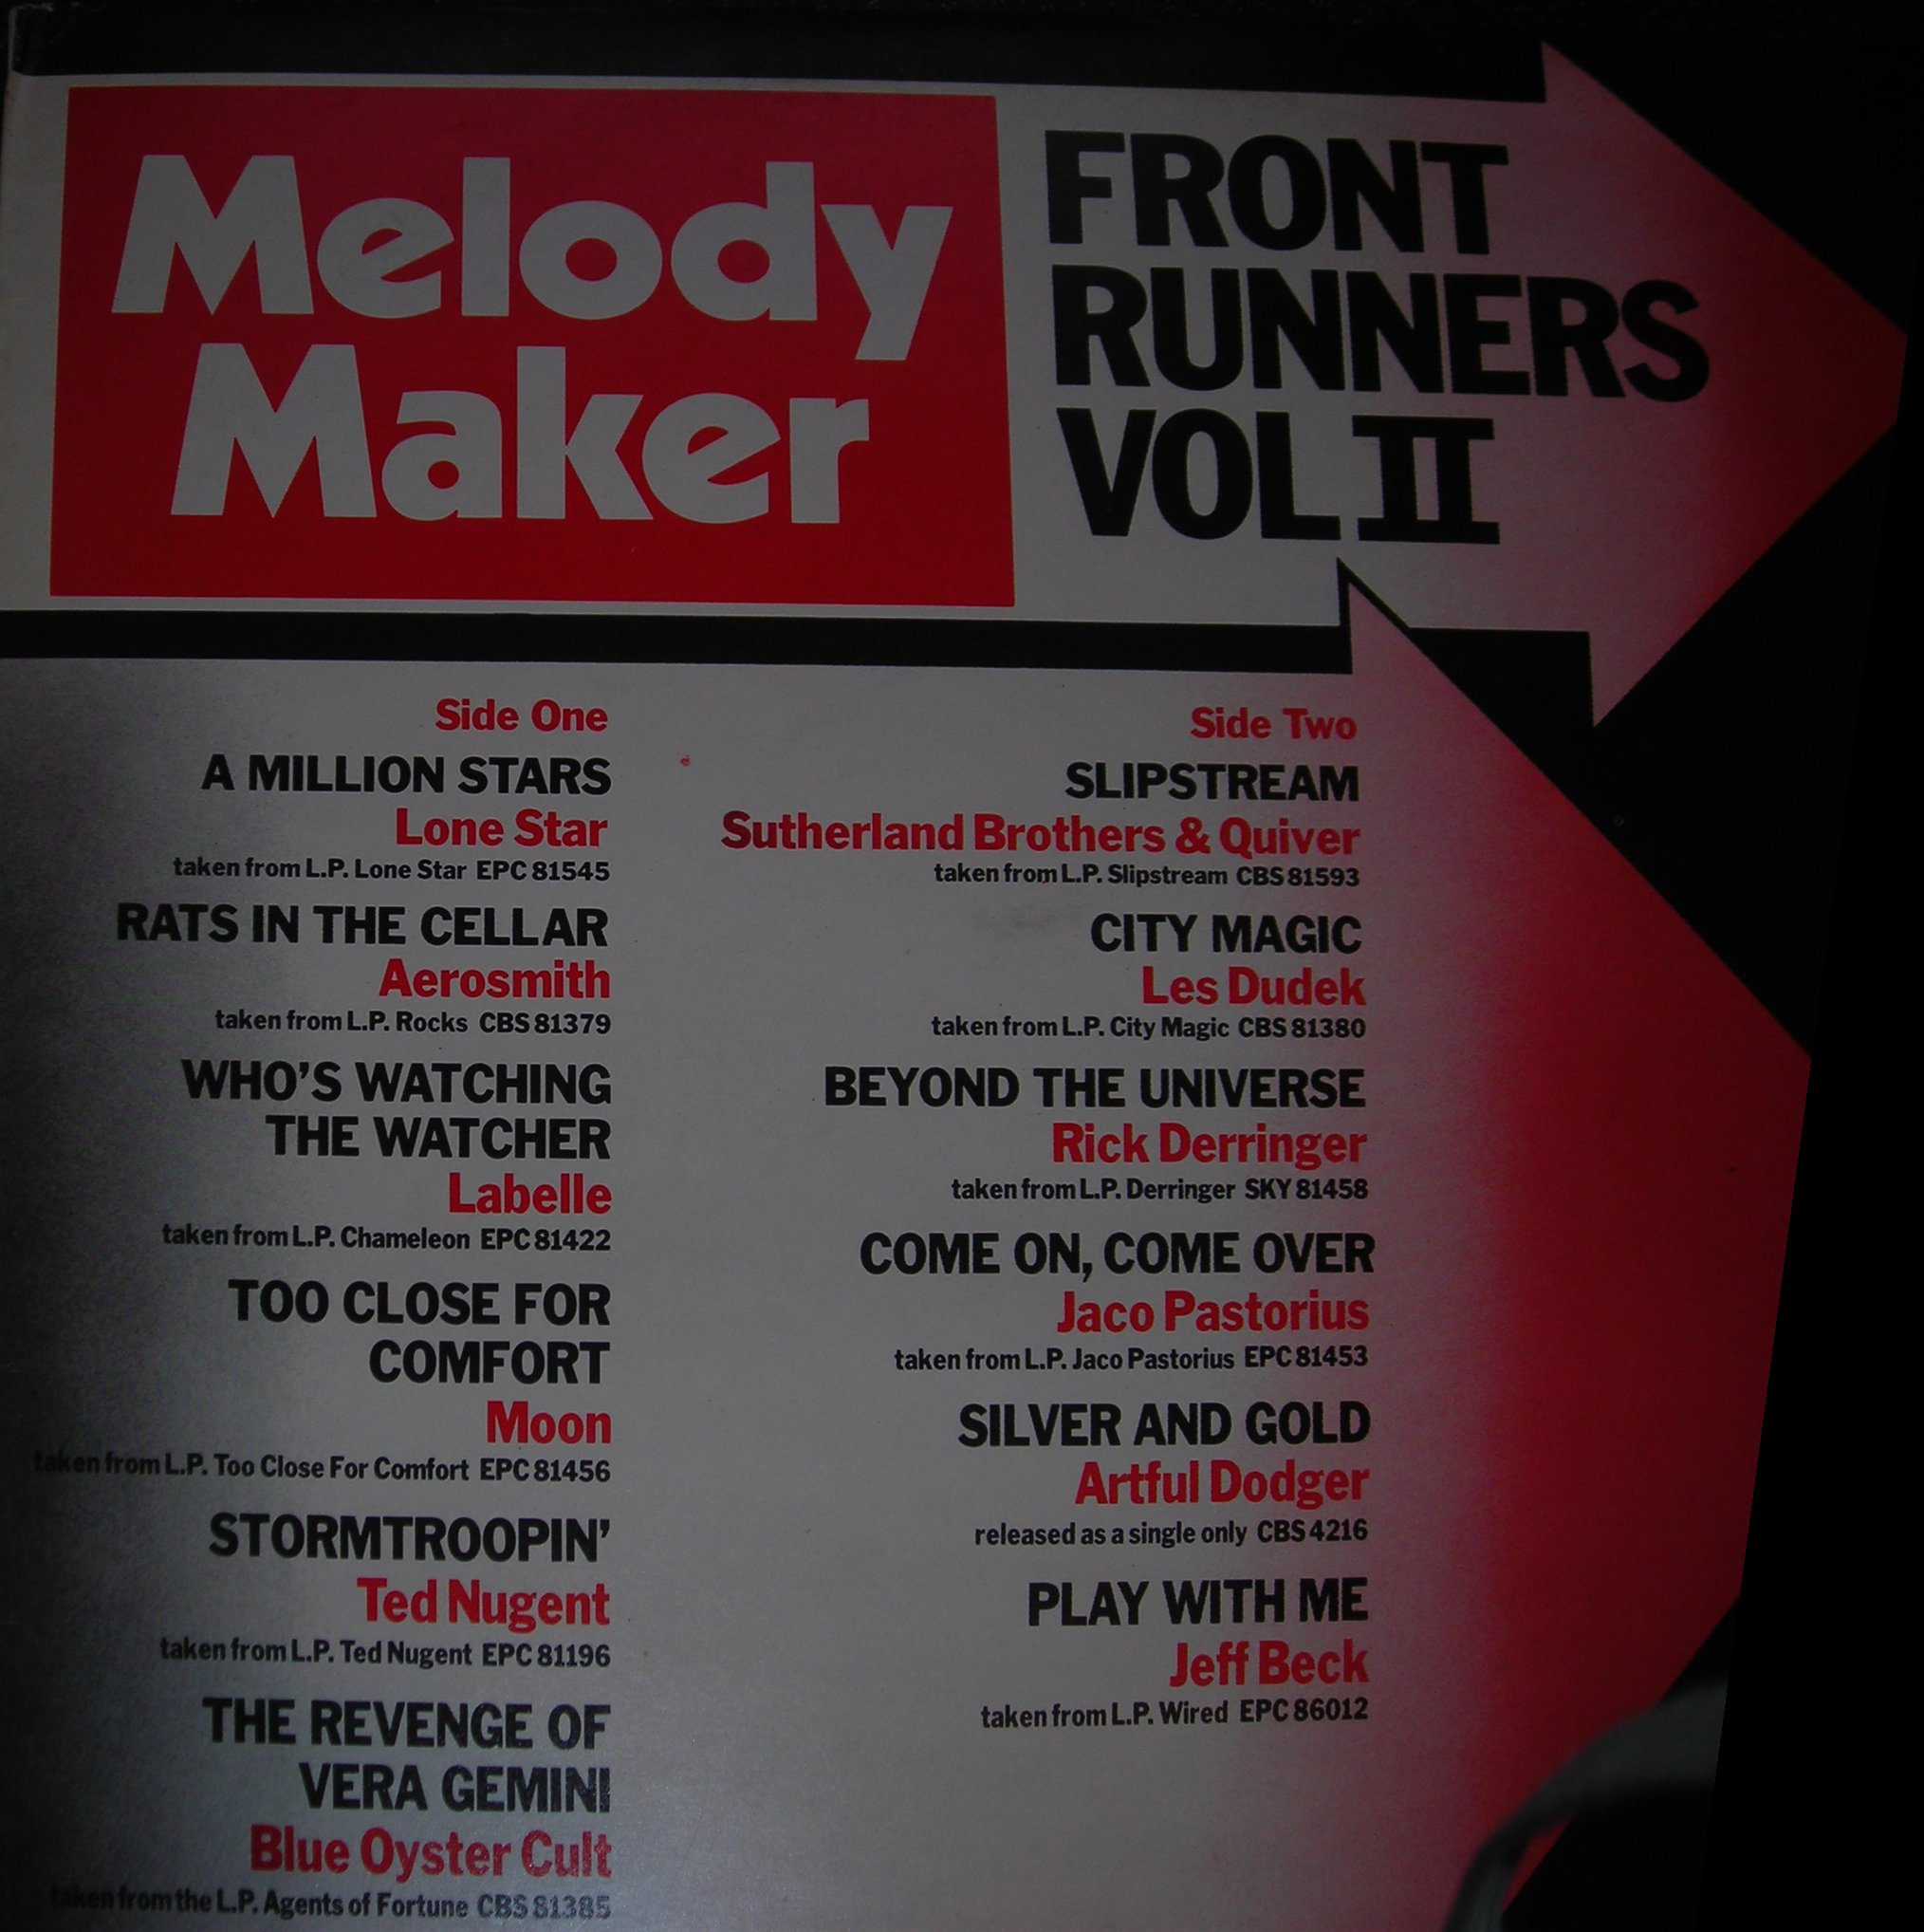 Melody Maker freebie 2